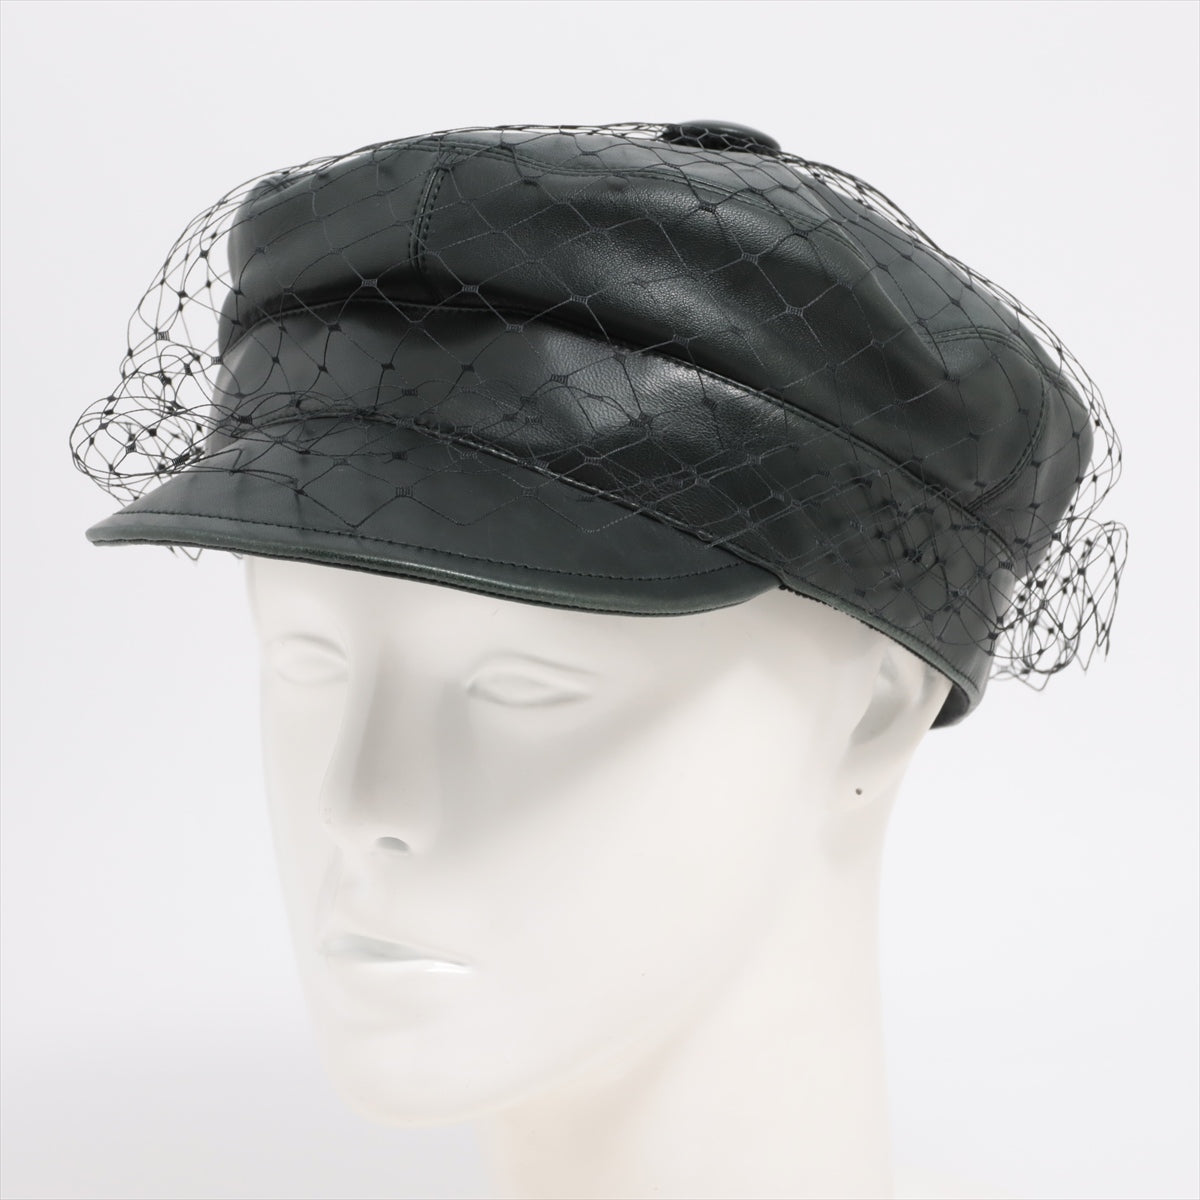 Christian Dior 85PAR920G700 Newsboy cap 59 Silk × Lambskin Black